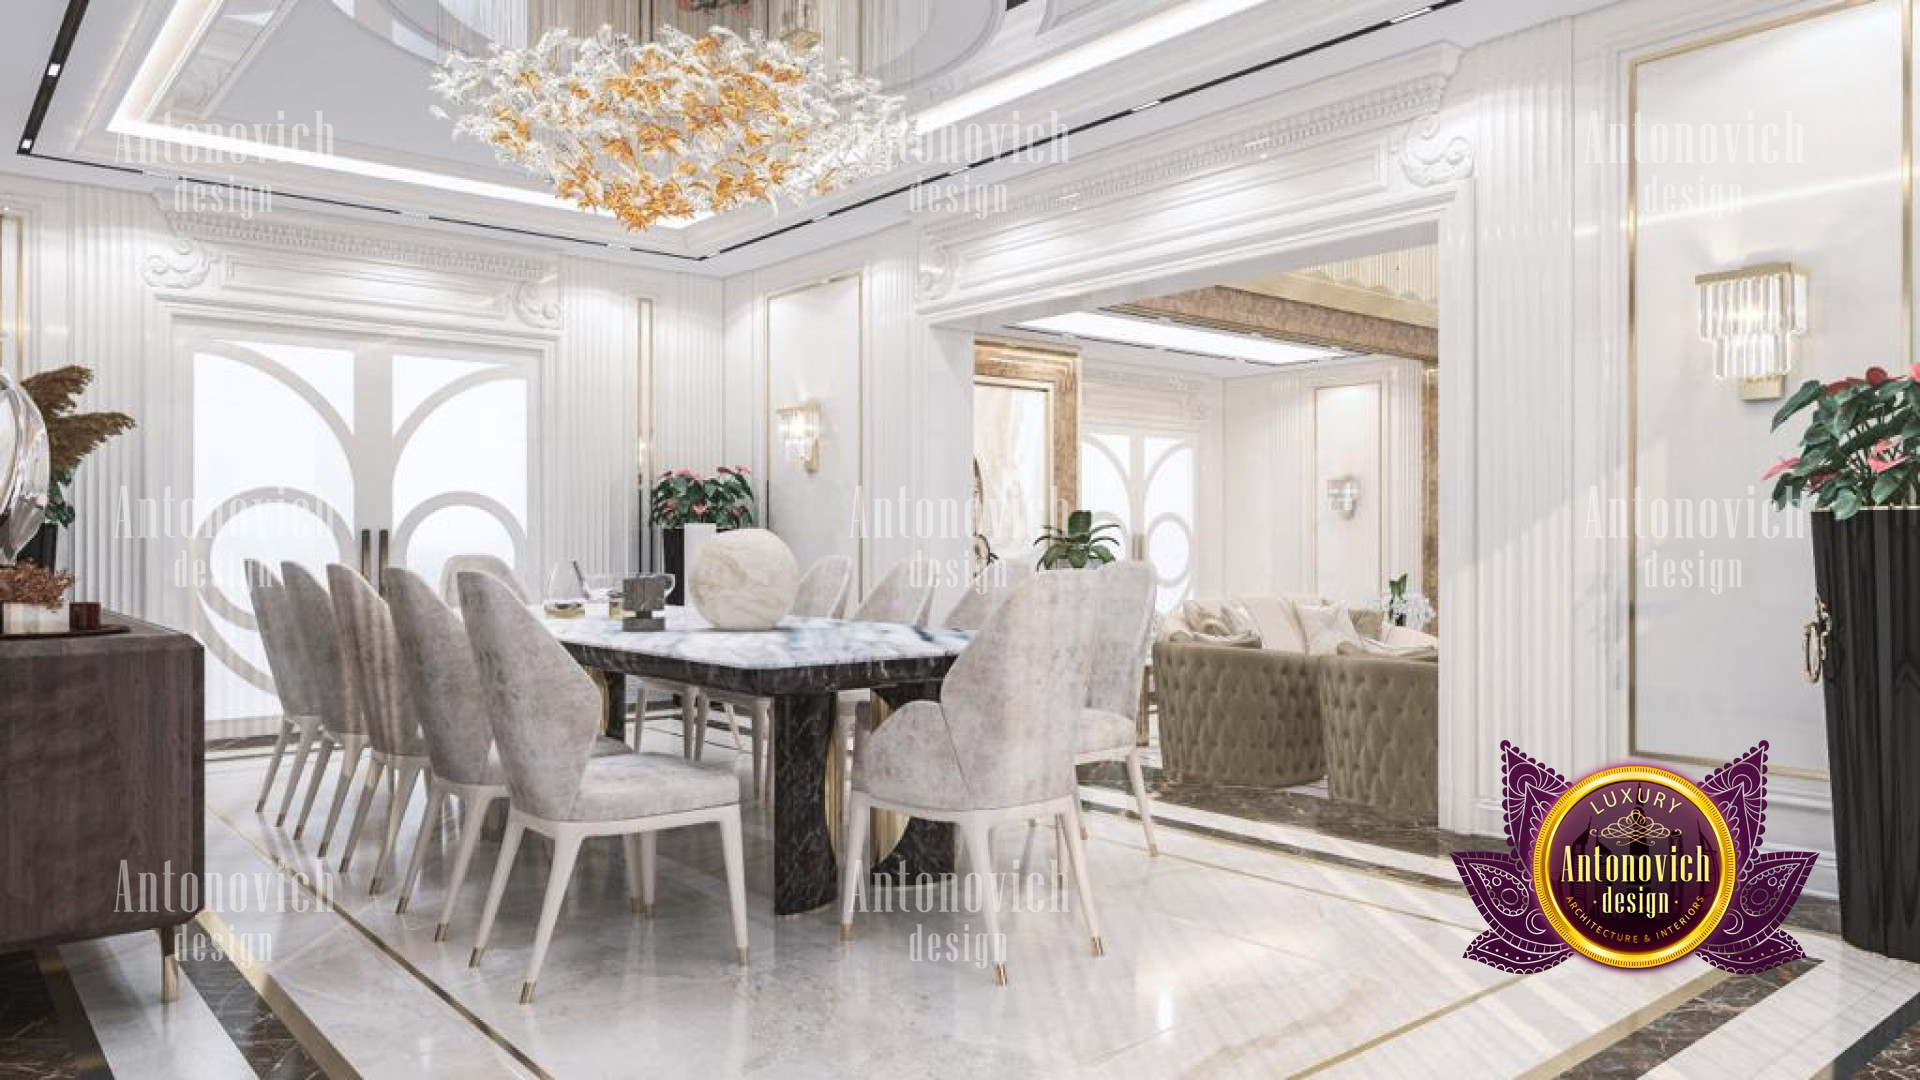 Stylish Interiors For 22 Carat Villa Design The Palm